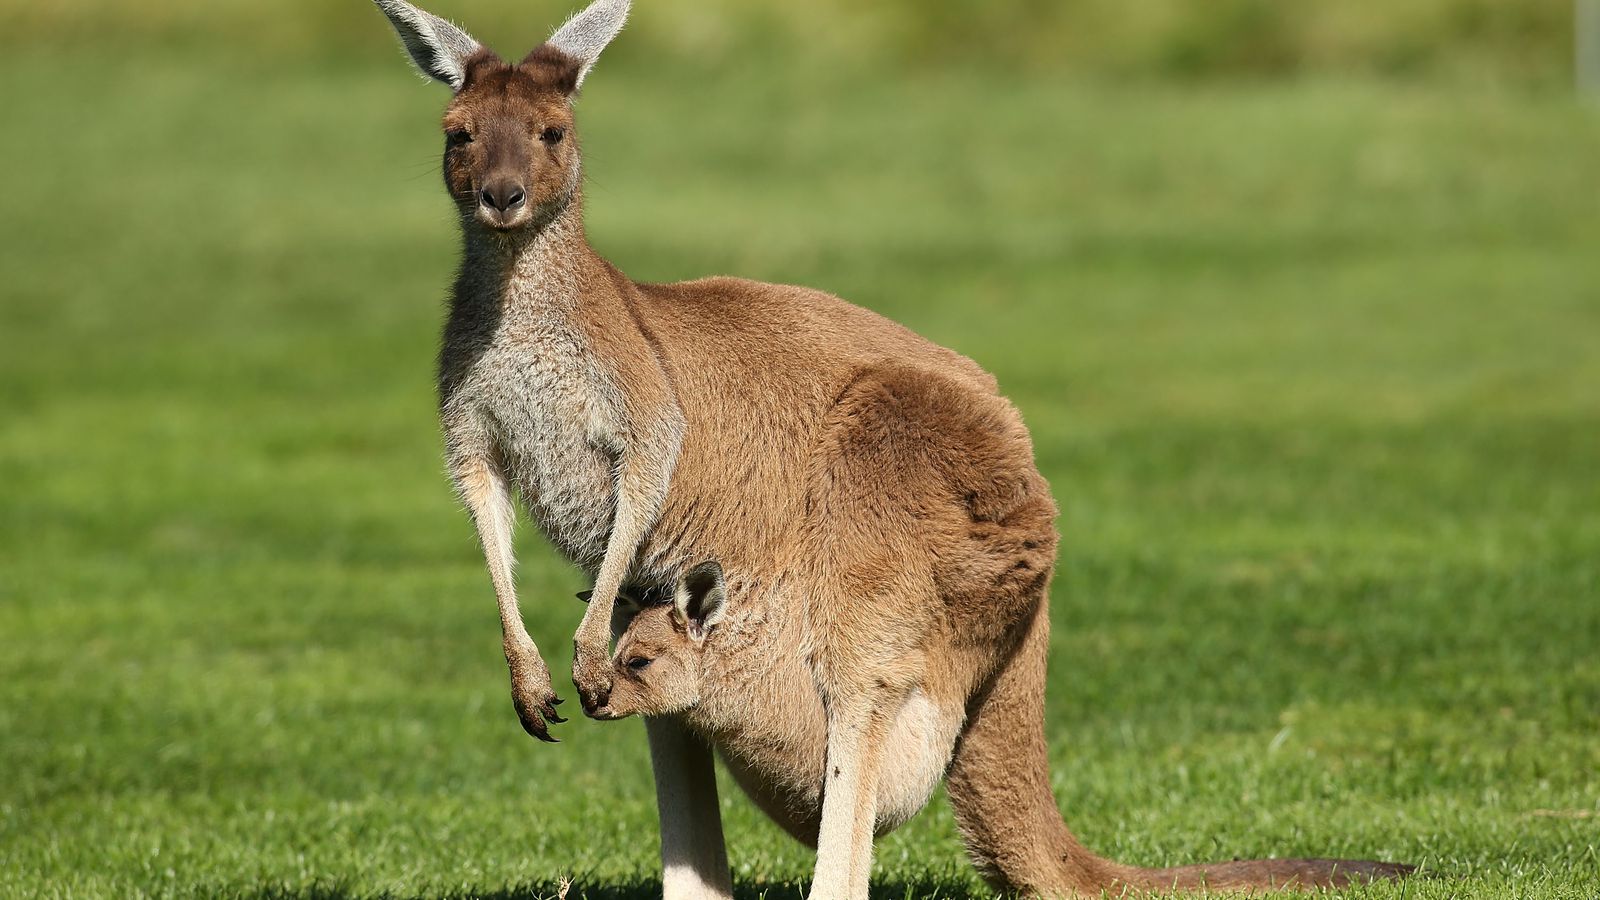 Are Kangaroos really fartless?